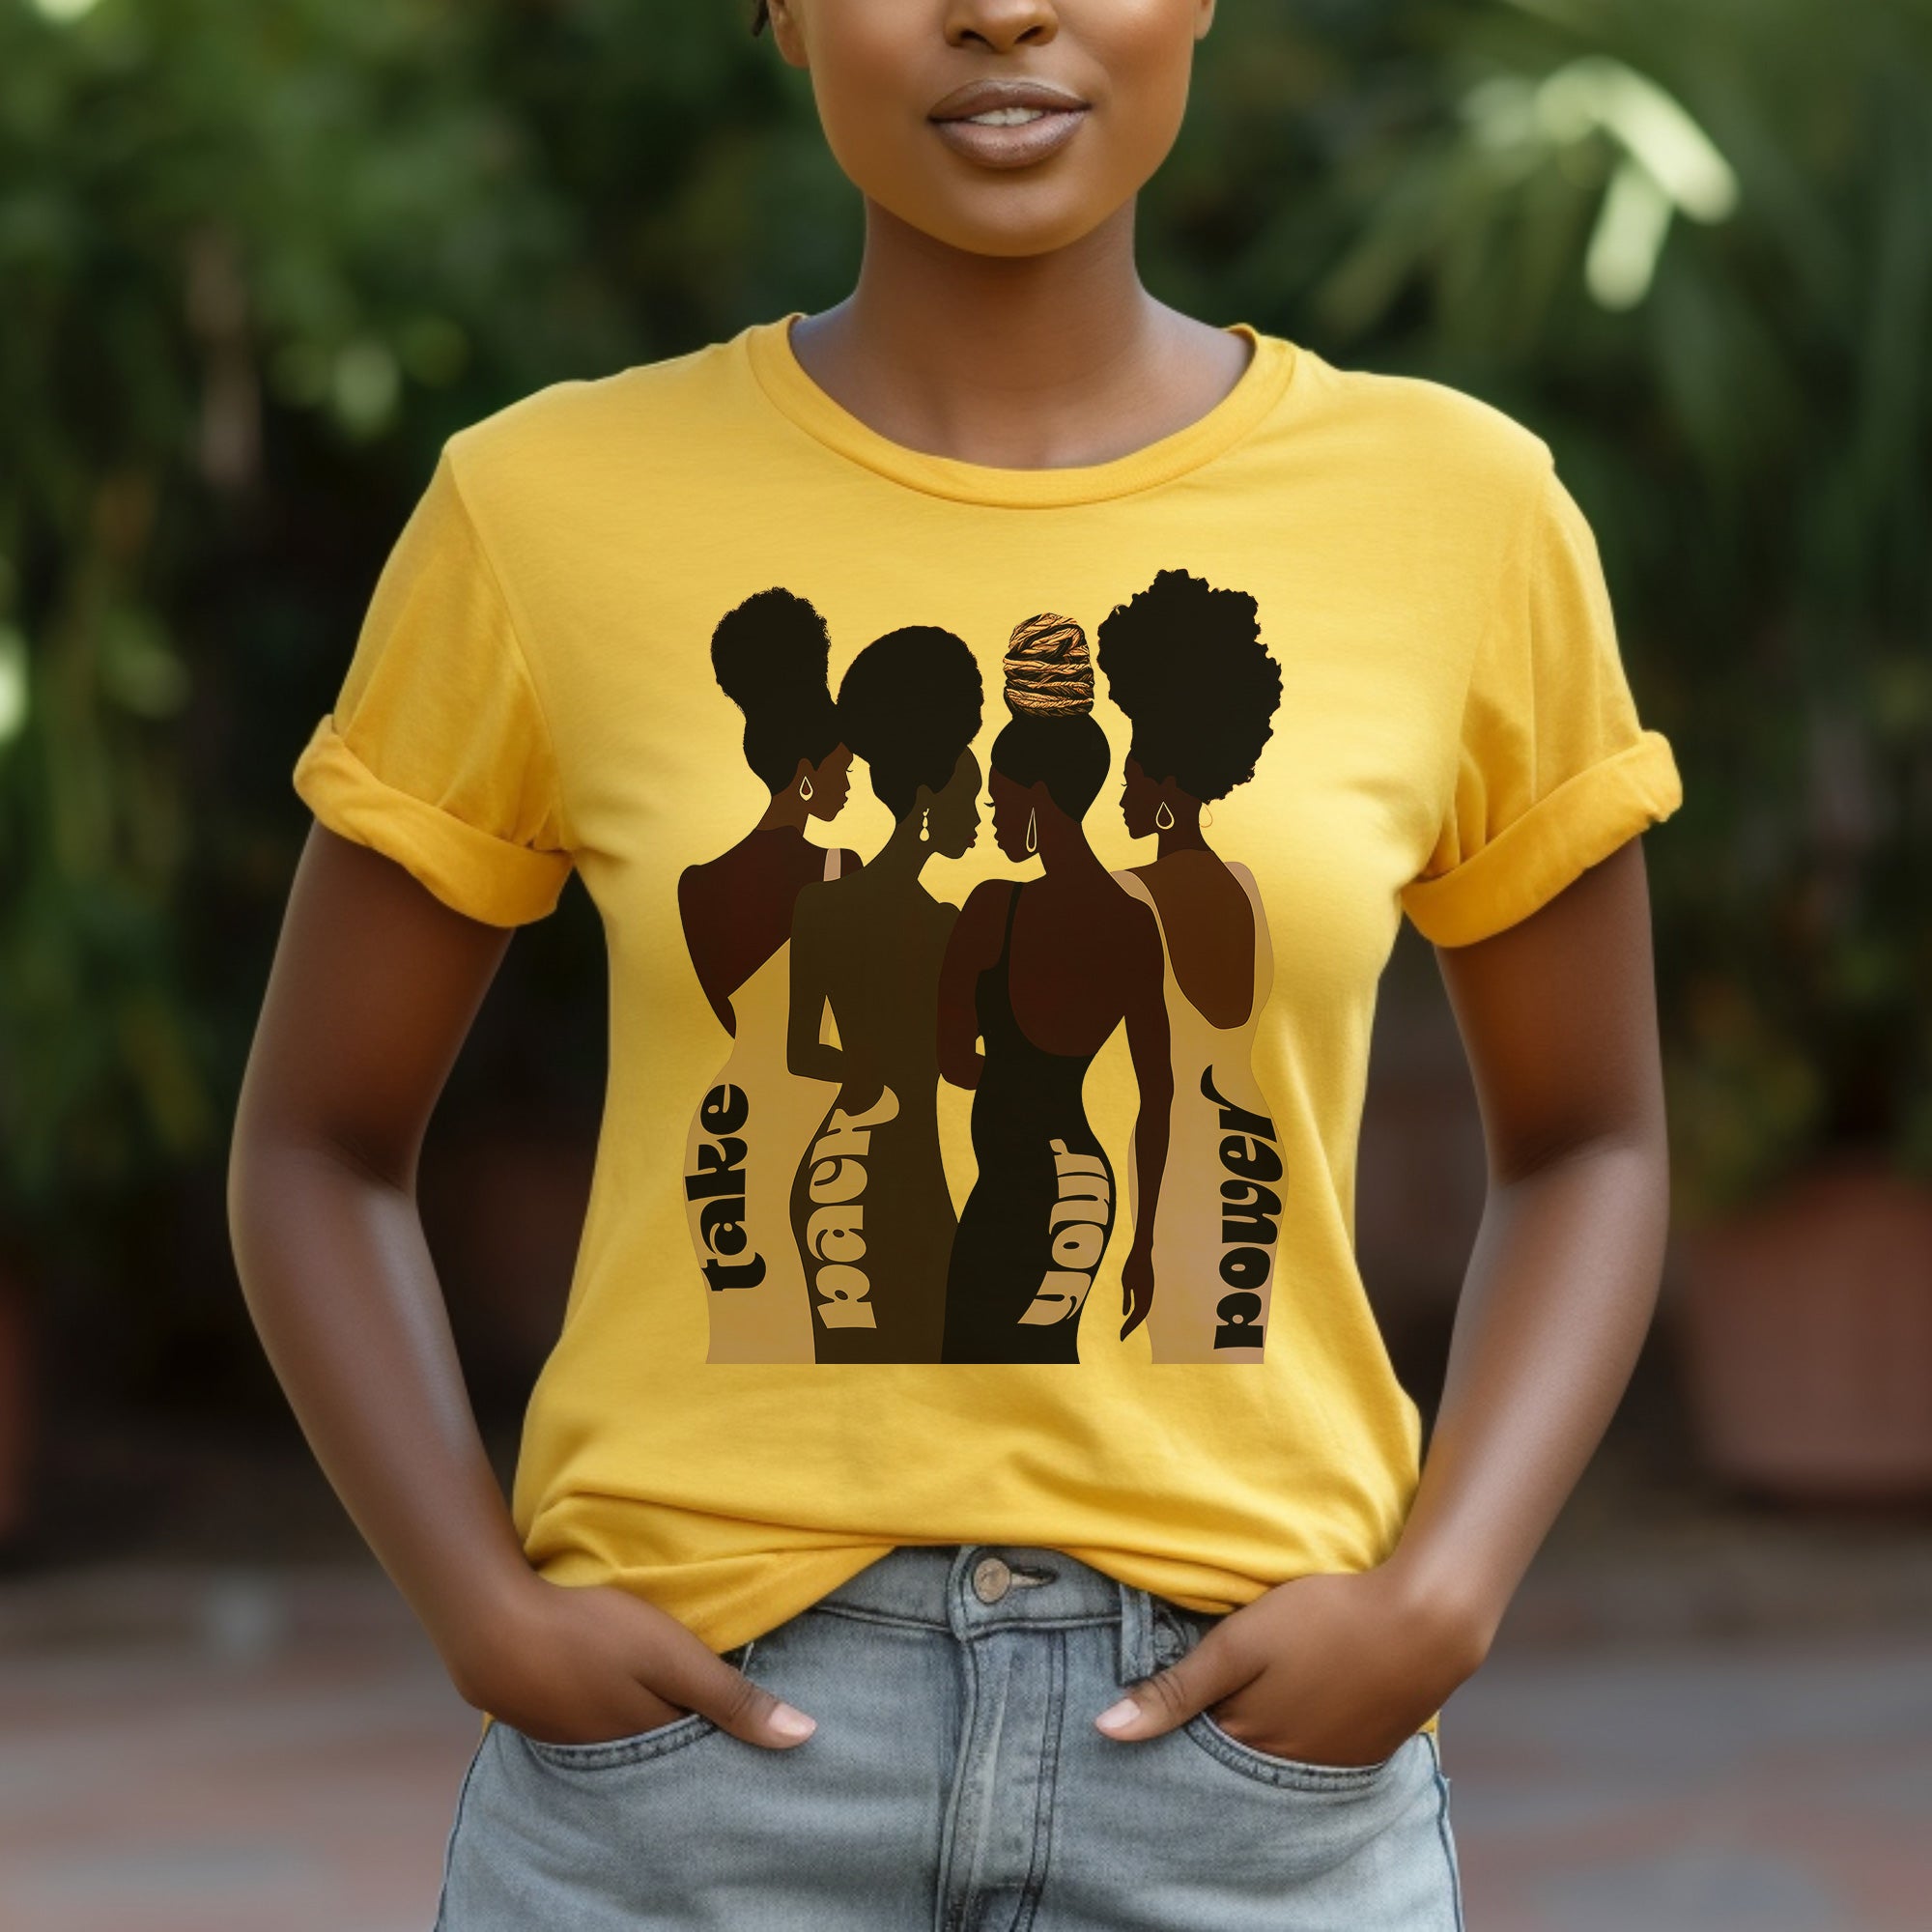 African American Women Tee Take Back Your Power Shirt.